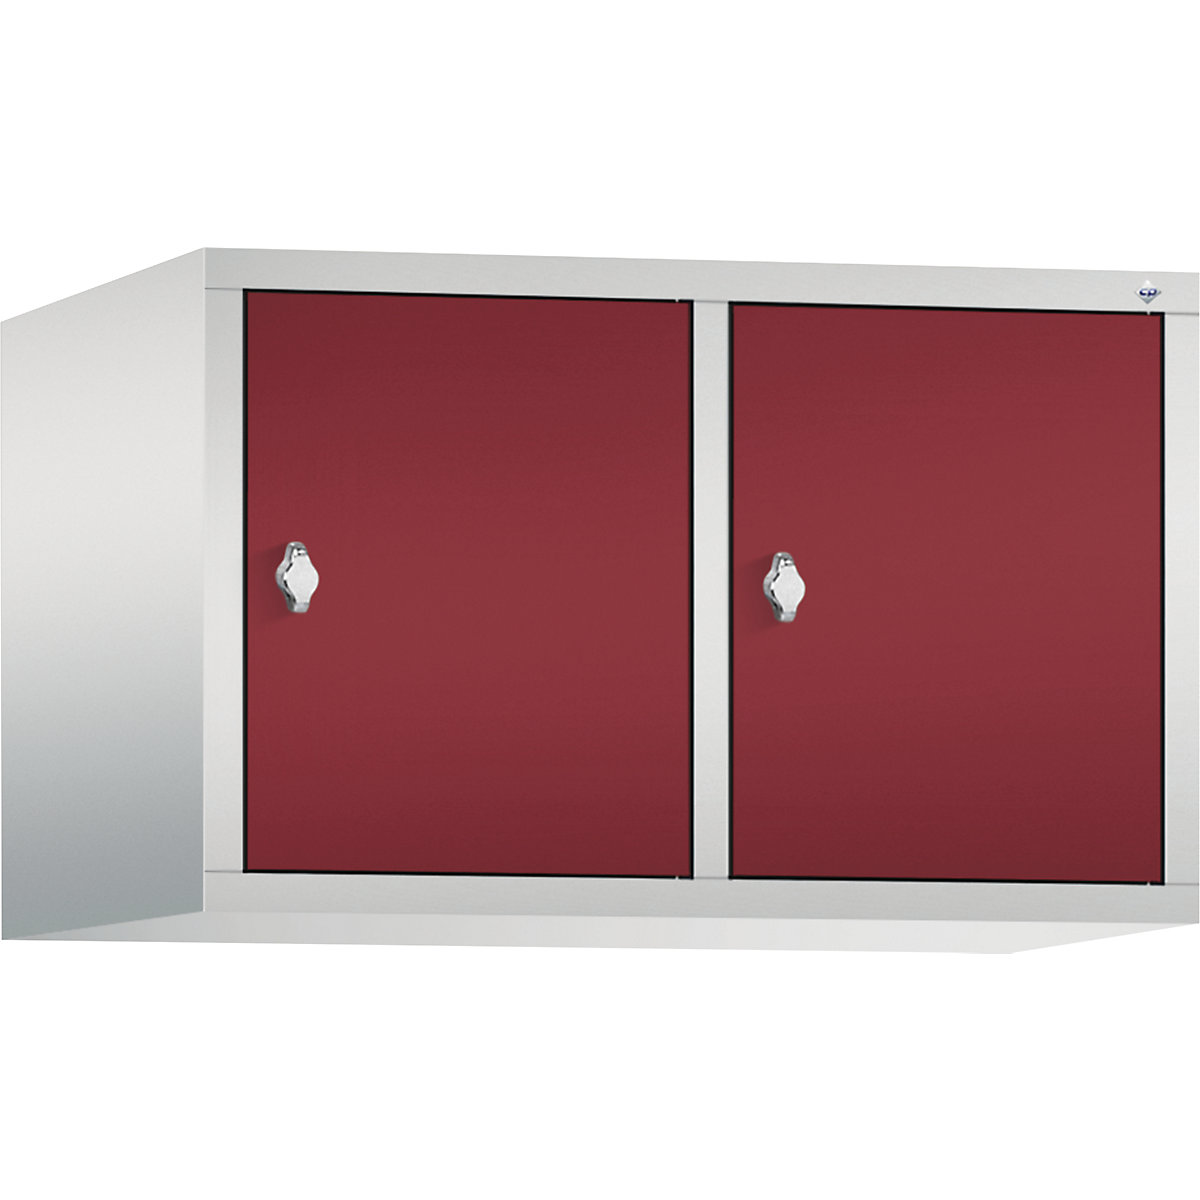 C+P – Altillo CLASSIC, 2 compartimentos, anchura de compartimento 400 mm, gris luminoso / rojo rubí